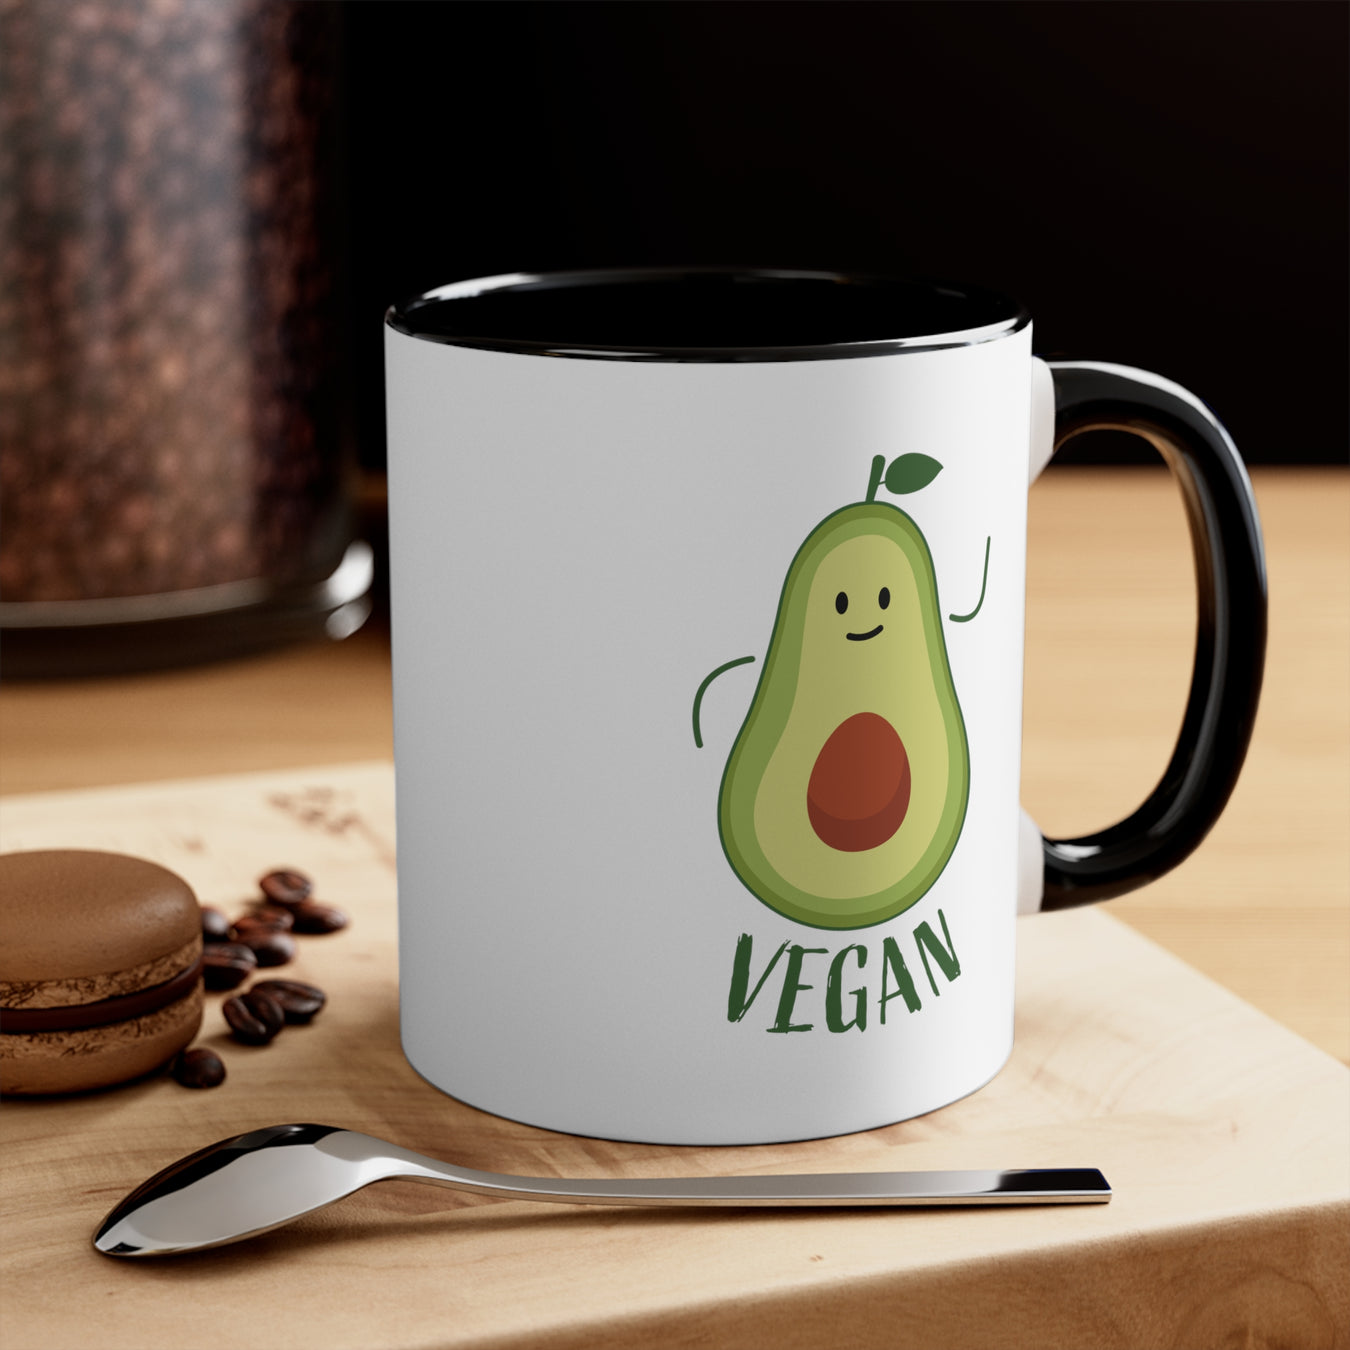 Avocado Vegan Accent Coffee Mug - Custom Two-Tone Design for a Vibrant Morning